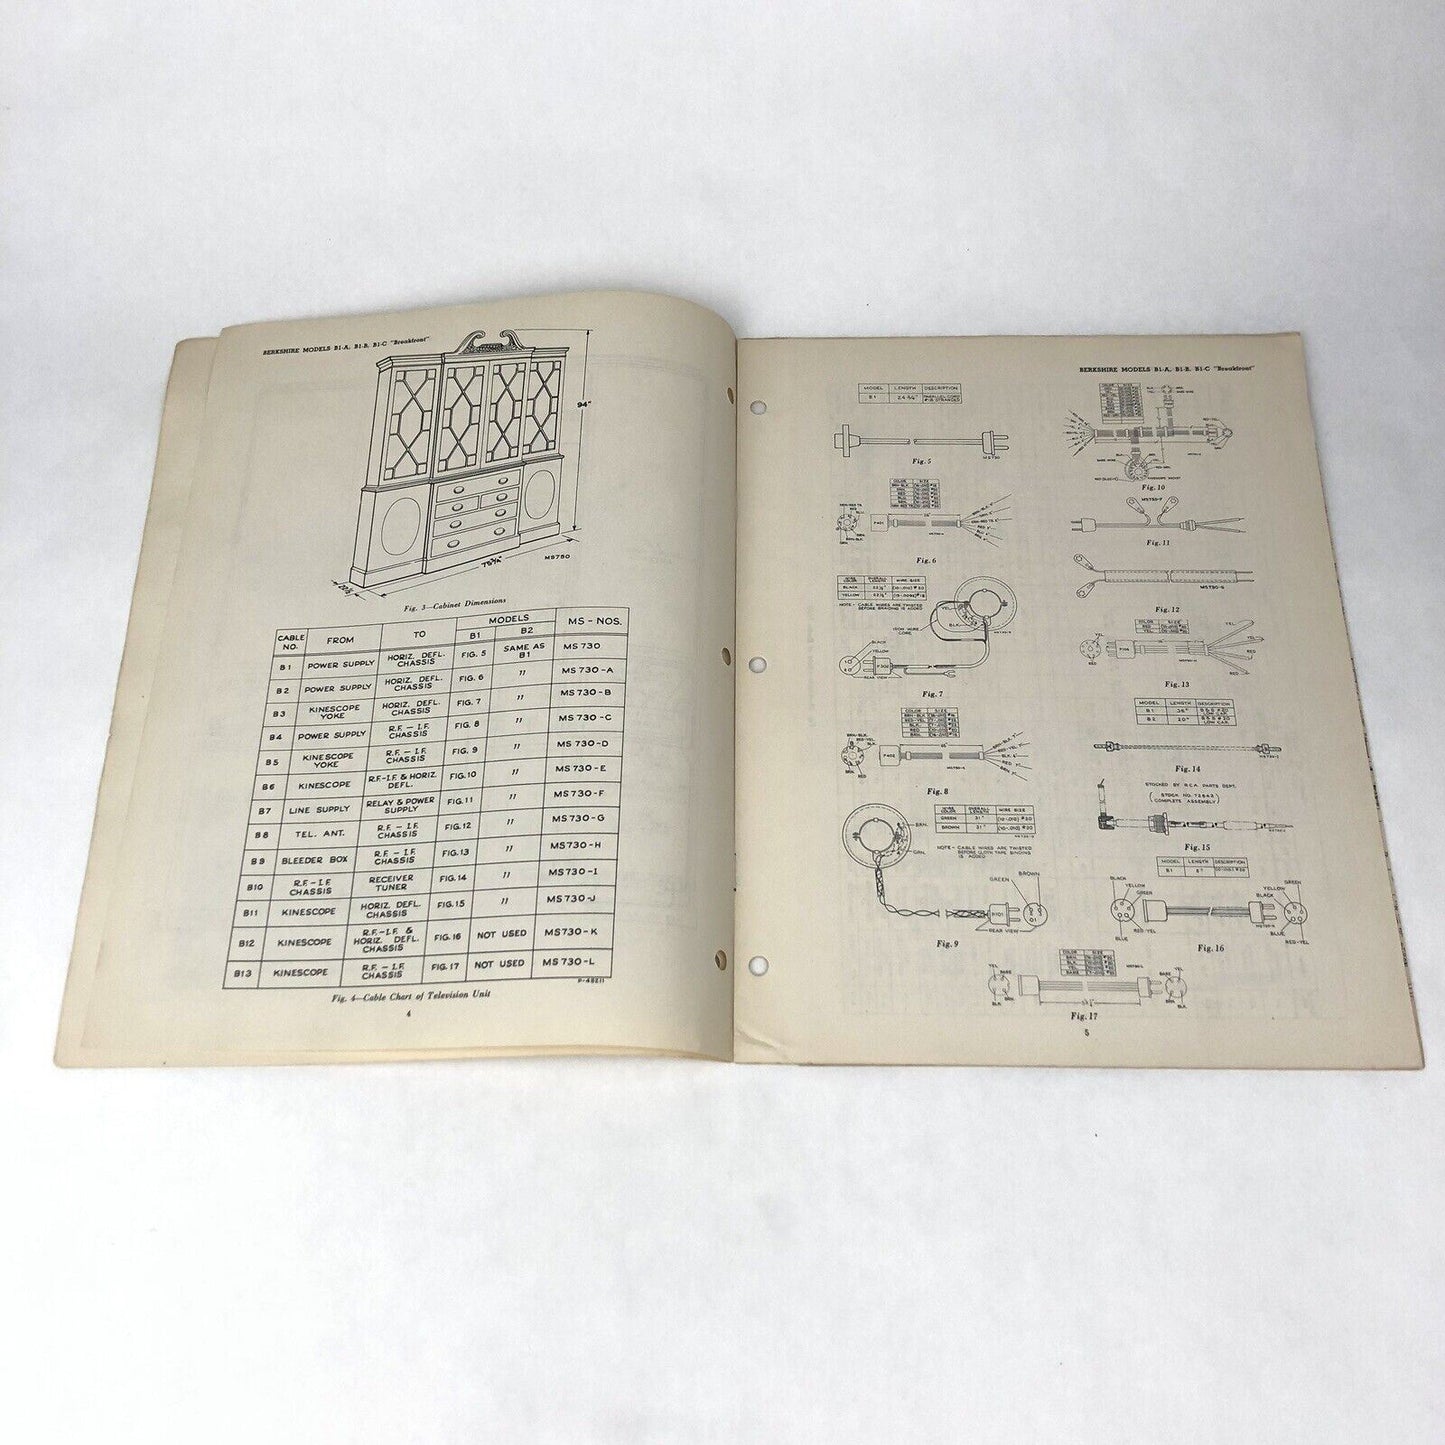 RCA VICTOR 1949 ‘Berkshire Breakfront’ Radio Phonograph TV Combo SERVICE DATA